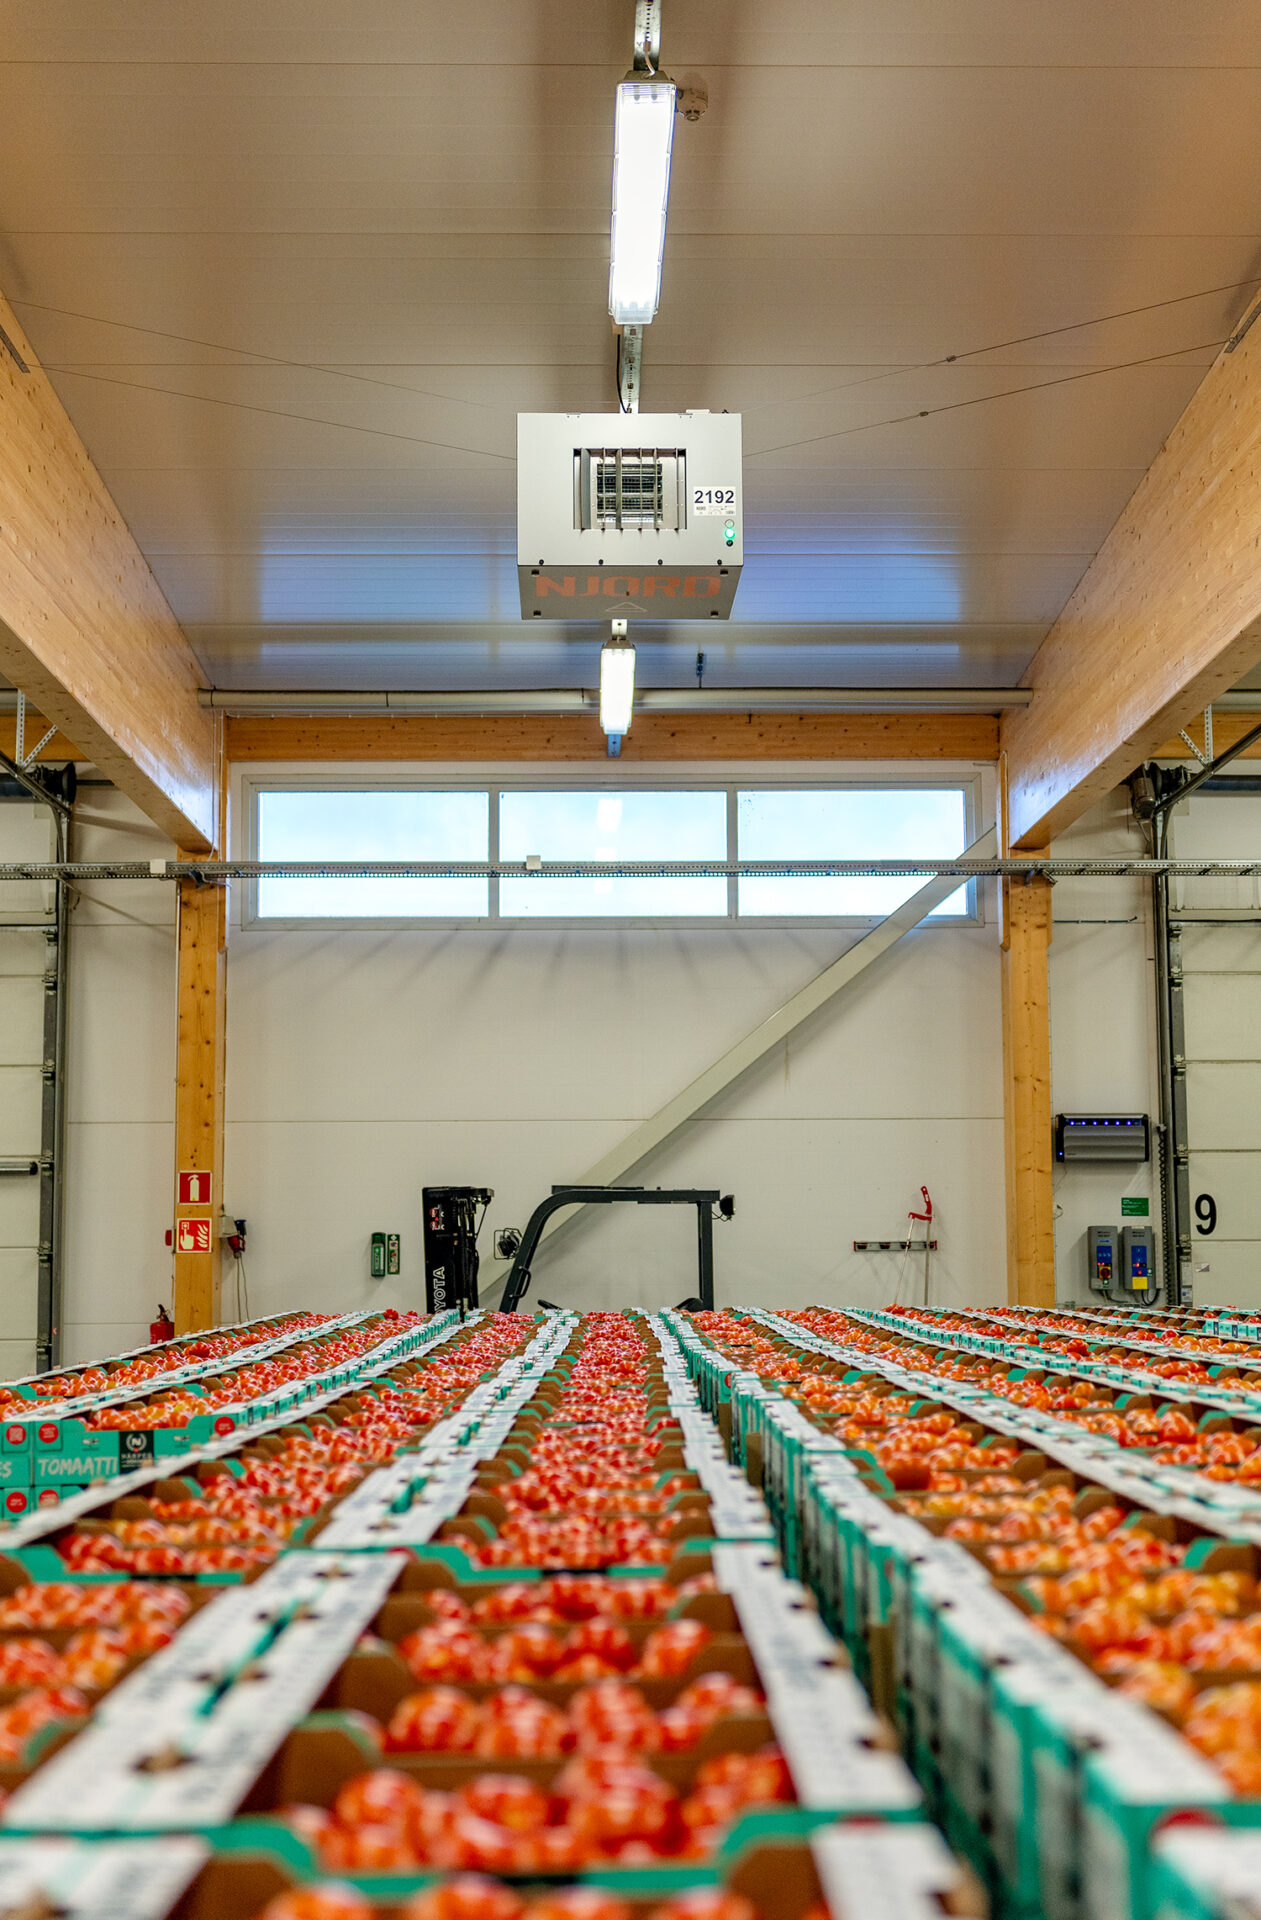 Njord luftrenare över tomater hos Närpes Grönsaker i Finland